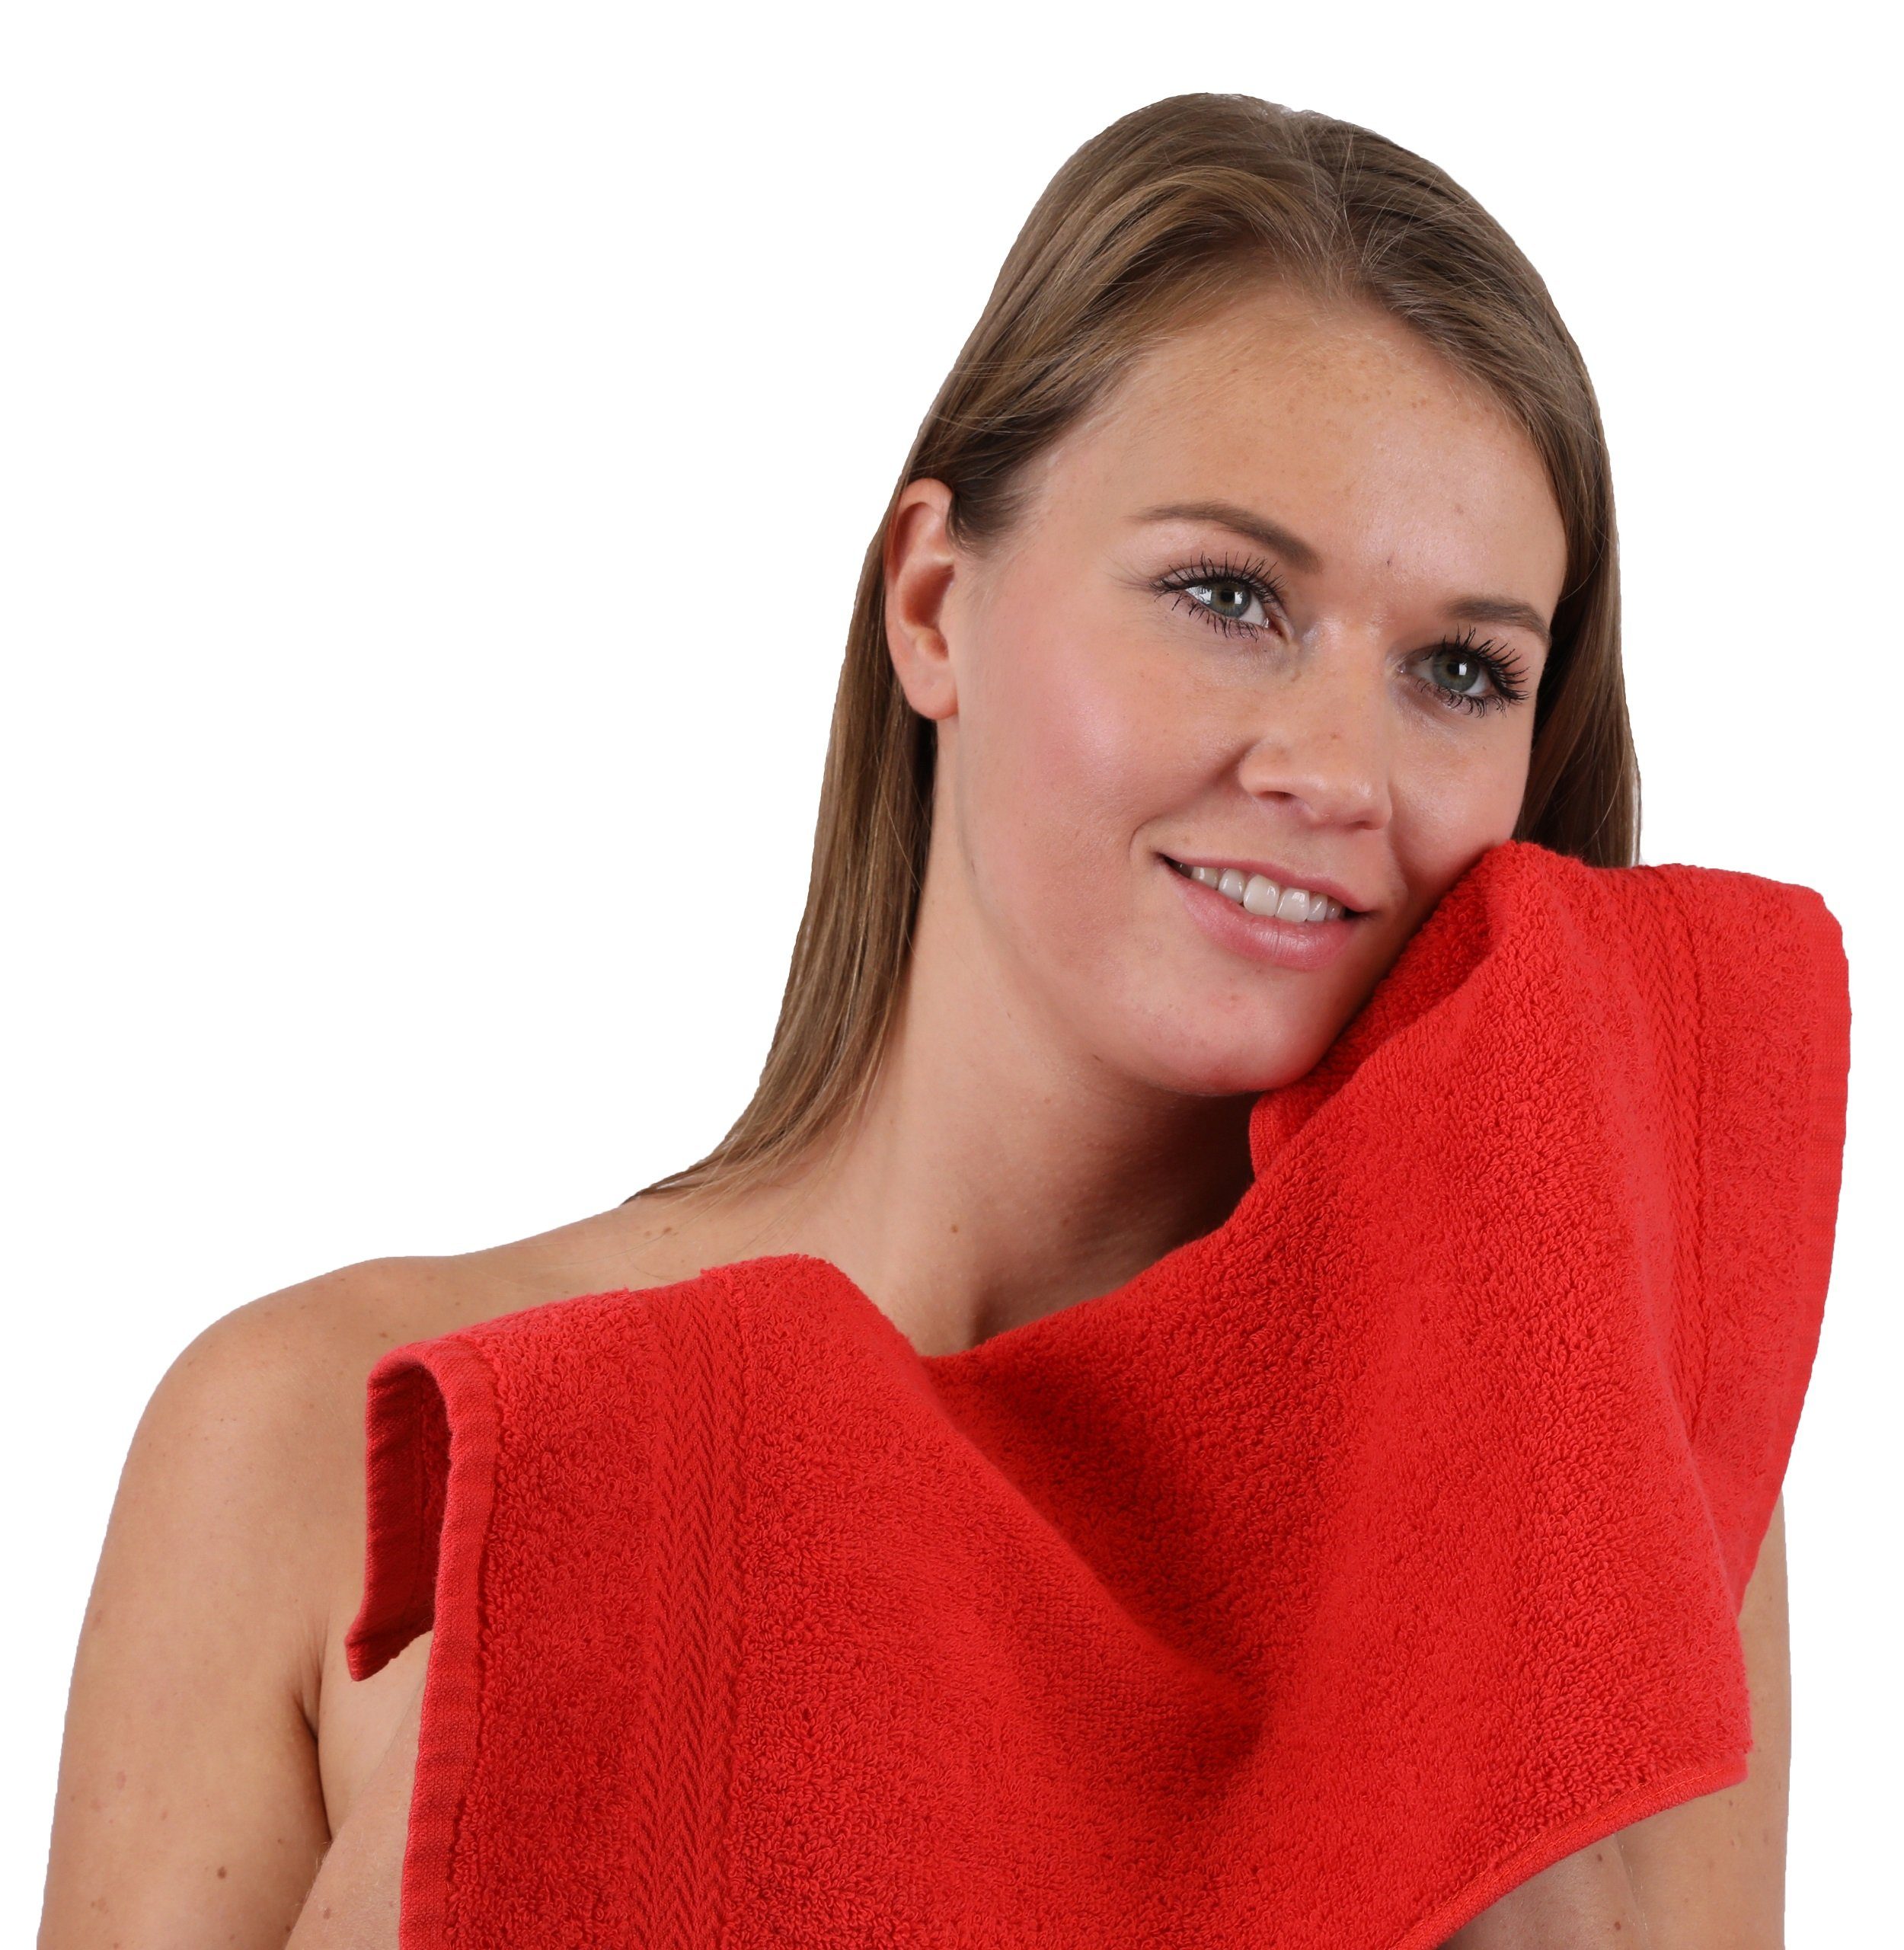 Set Handtuch-Set Altrosa, Farbe 10-TLG. Baumwolle, Rot & 100% Premium (10-tlg) Handtuch Betz